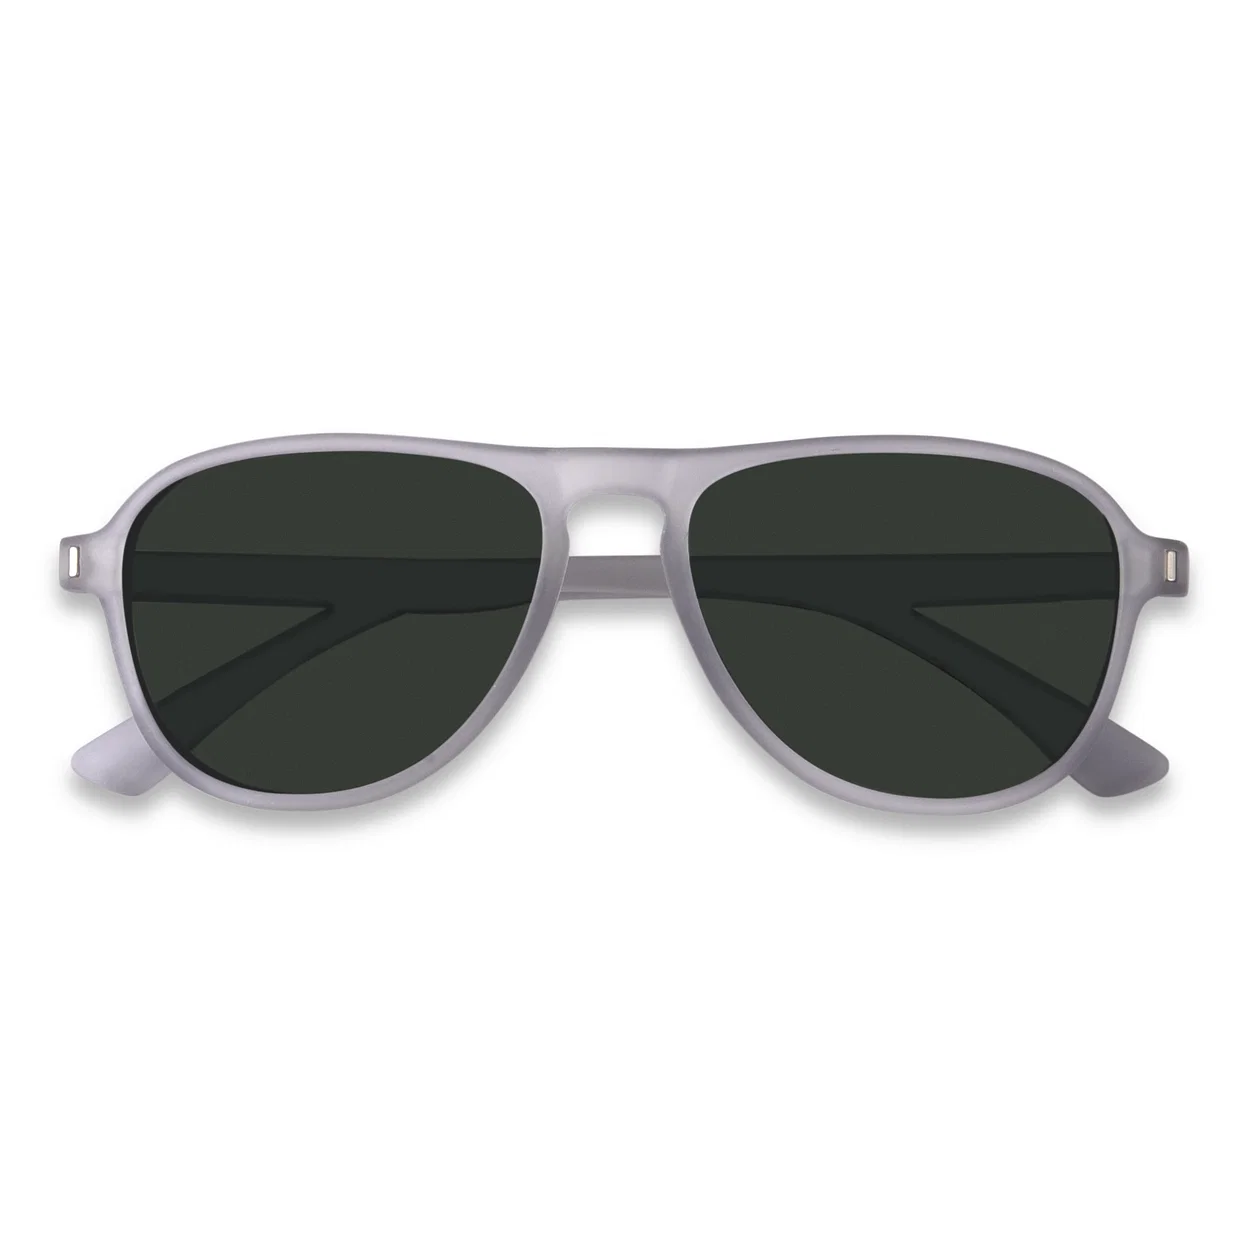 The Best Polarized Sunglasses Of 2022 For Outdoor Adventures » Explorersweb